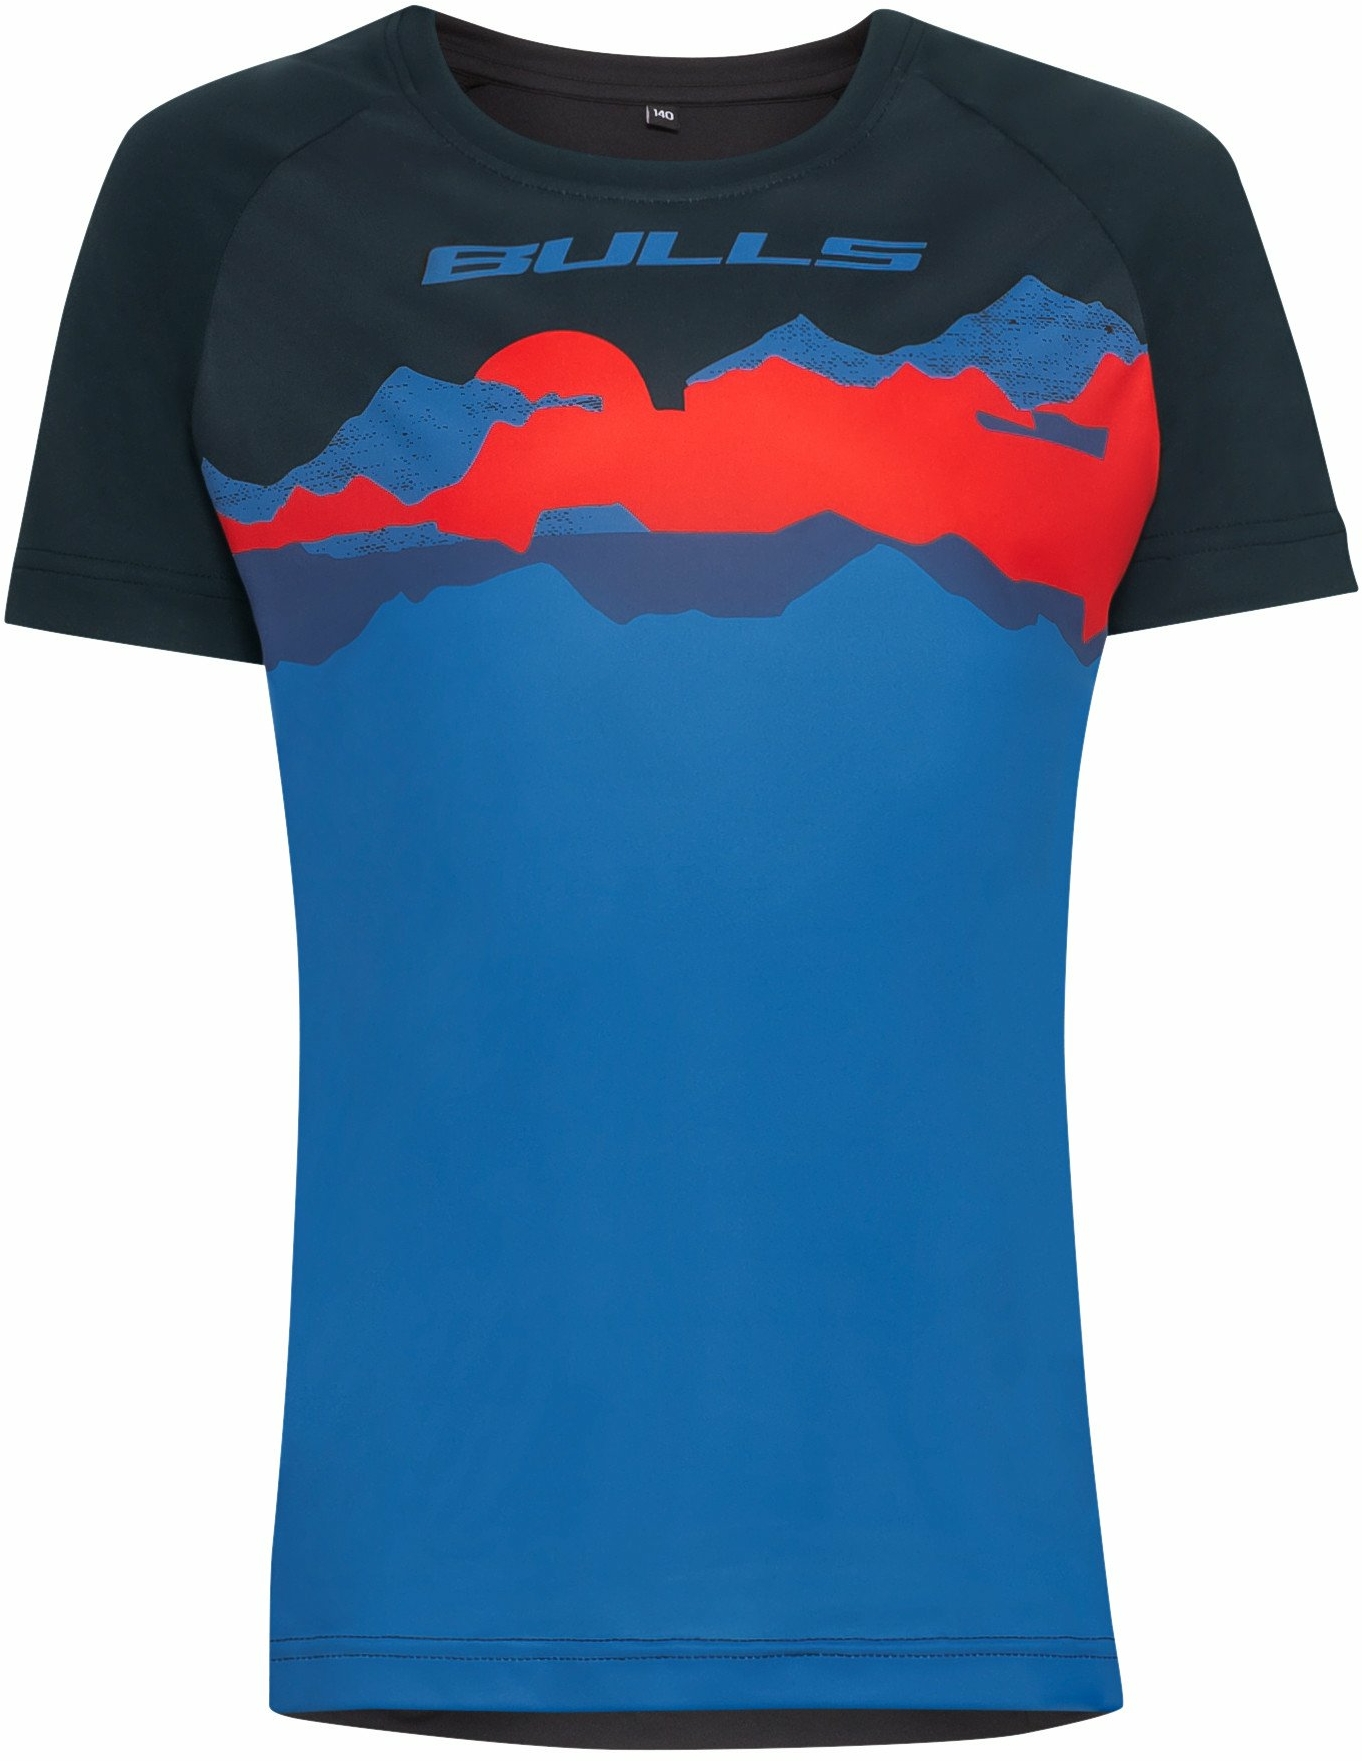 BULLS Trikot Junior Montania Shirt 152 blau / rot